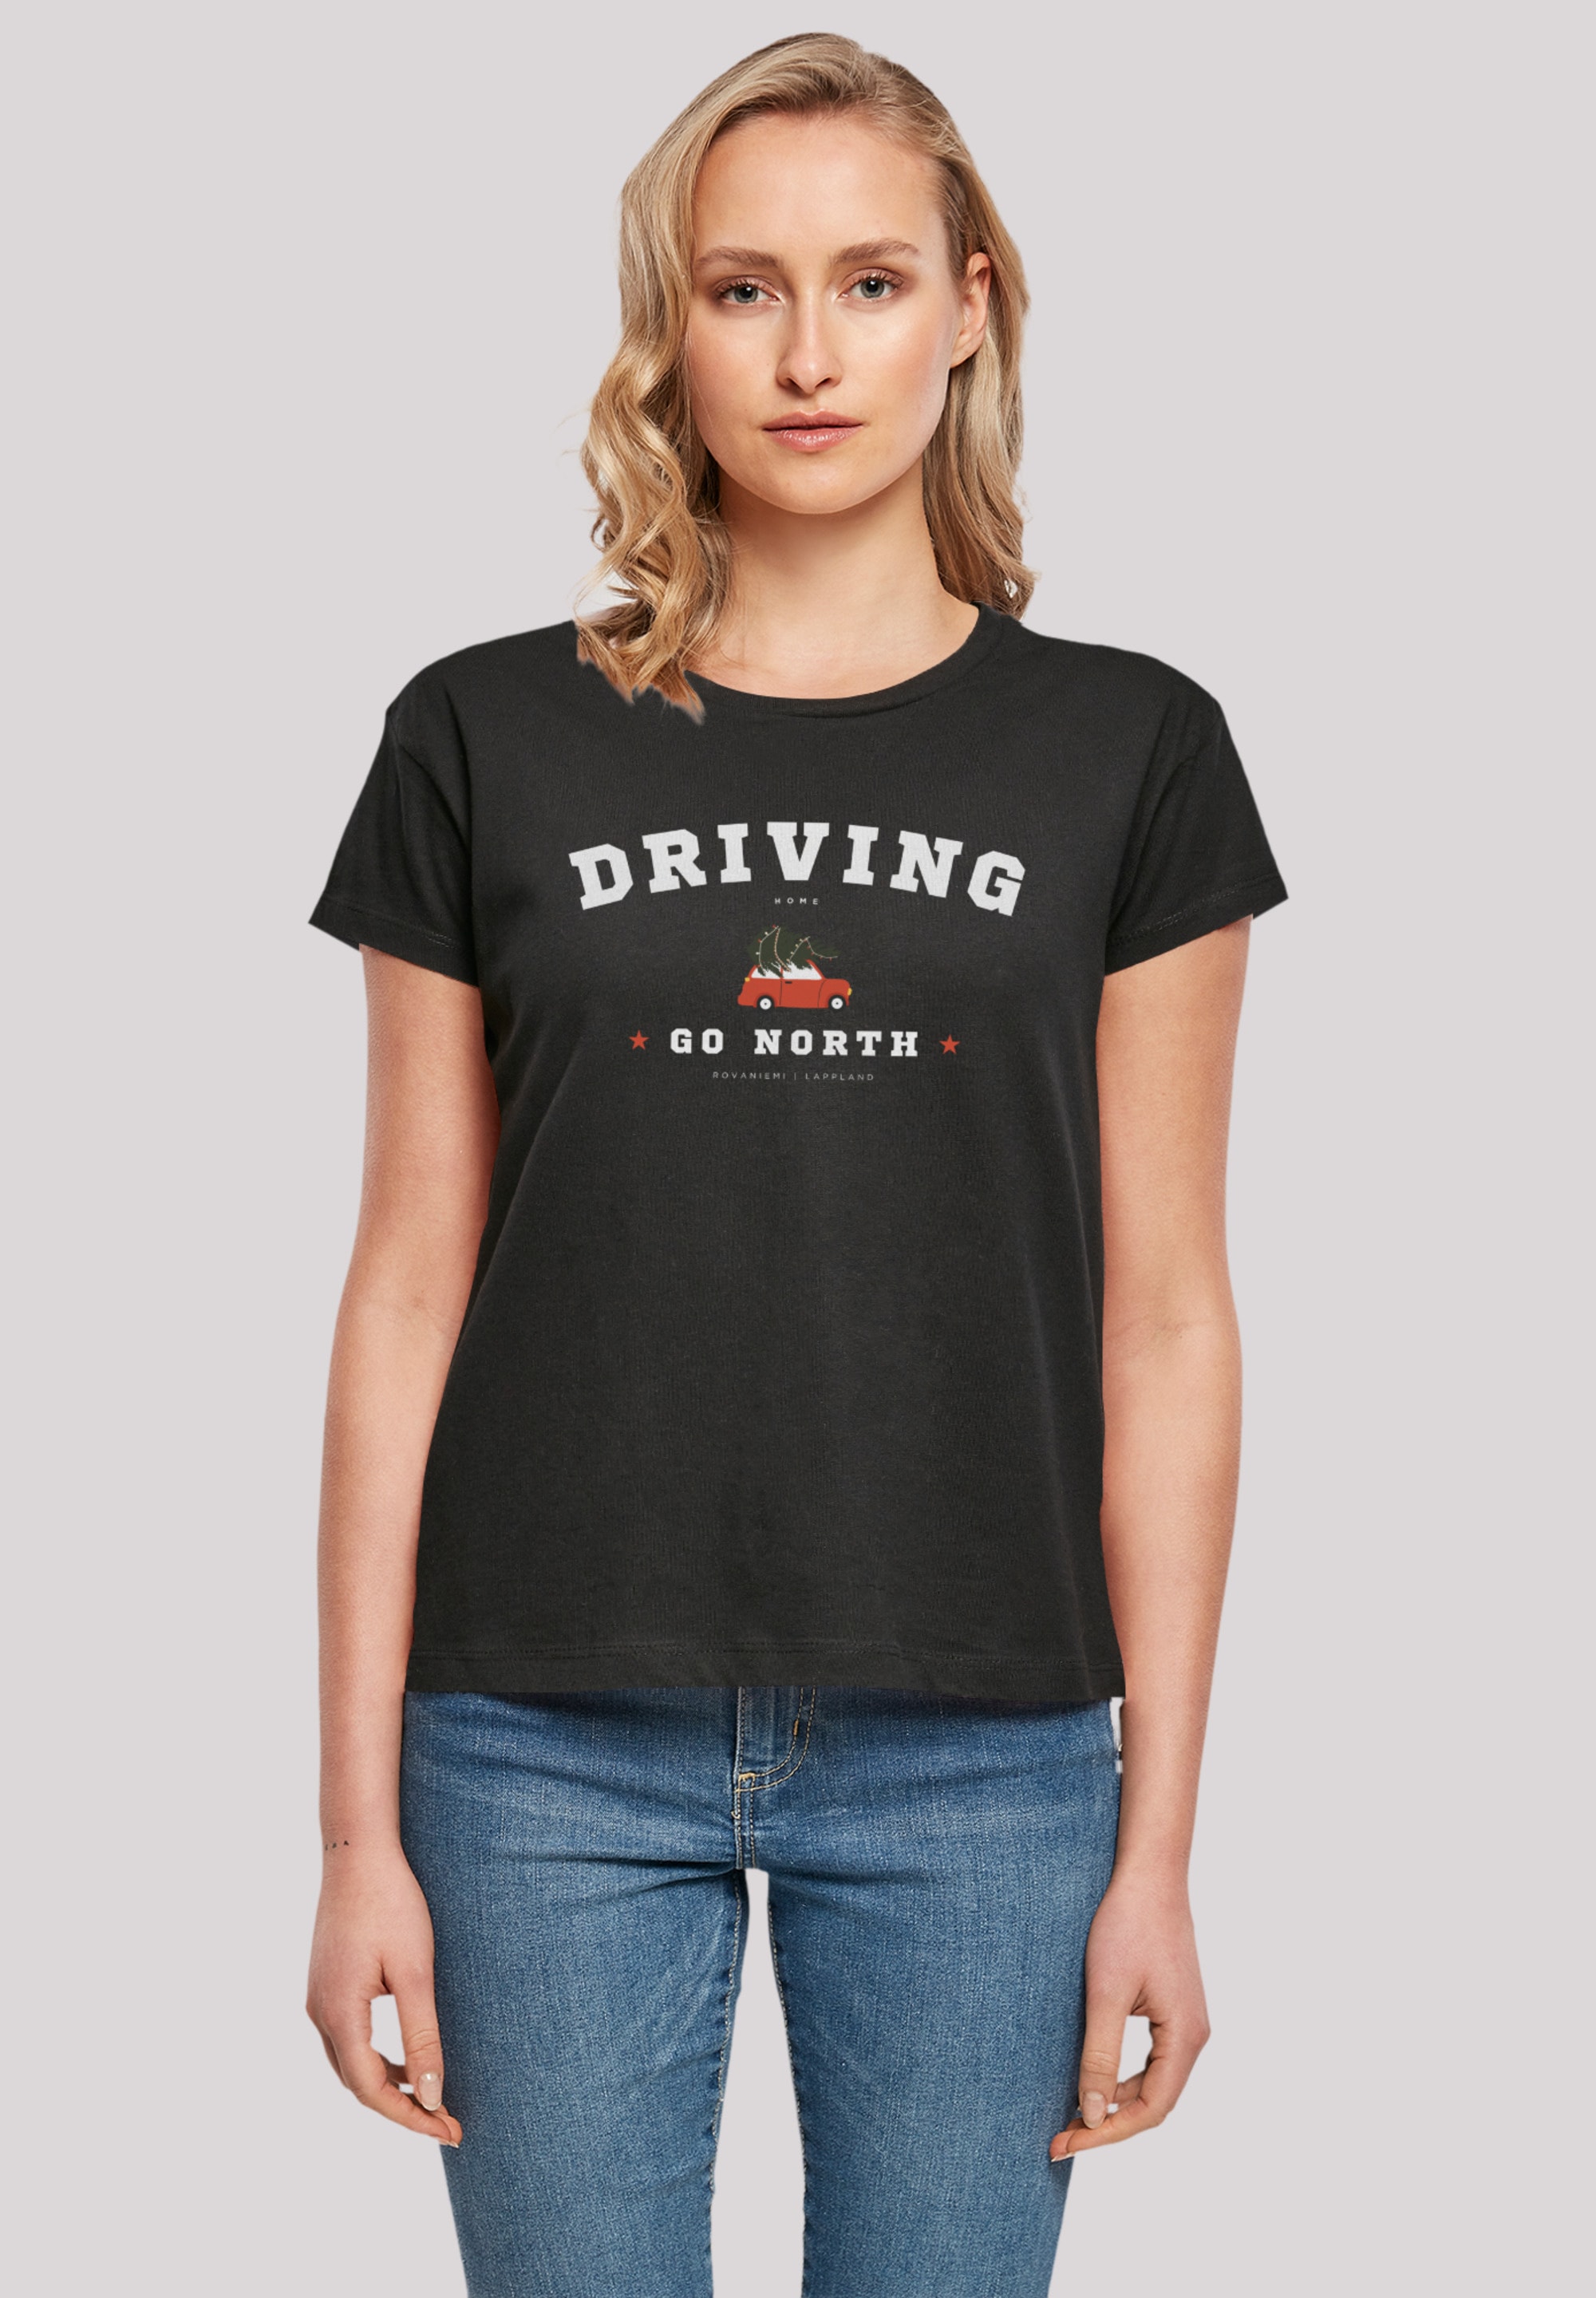 T-Shirt »Driving Home Weihnachten«, Weihnachten, Geschenk, Logo